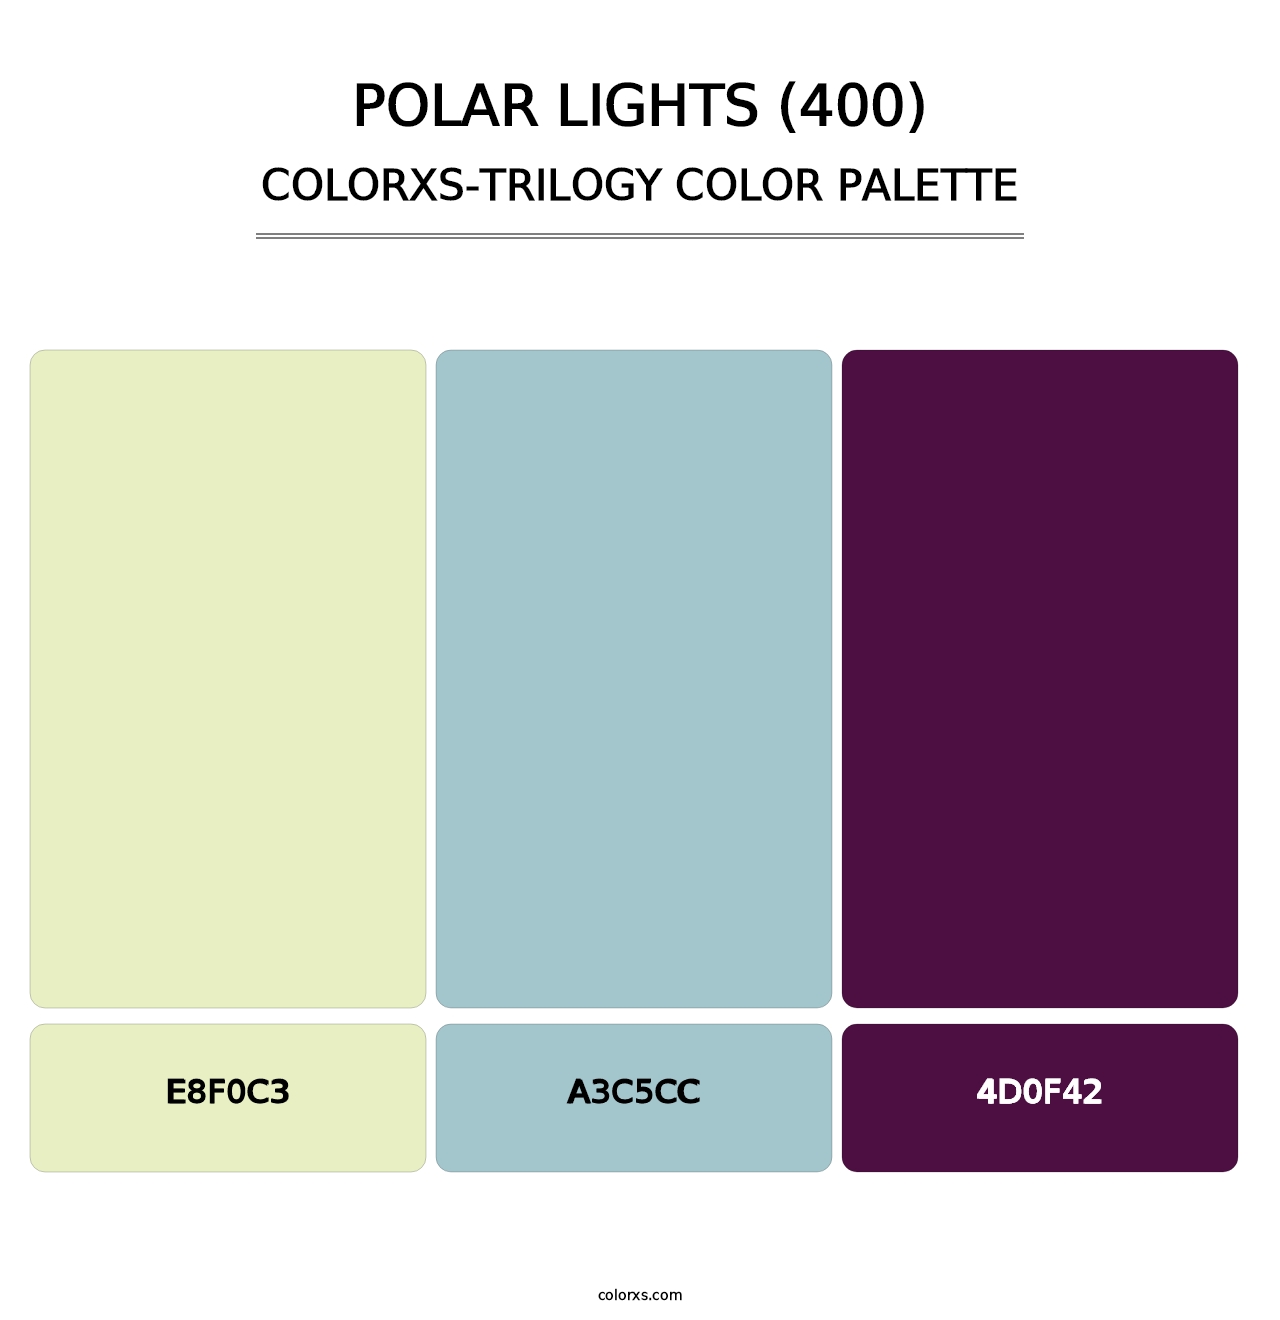 Polar Lights (400) - Colorxs Trilogy Palette